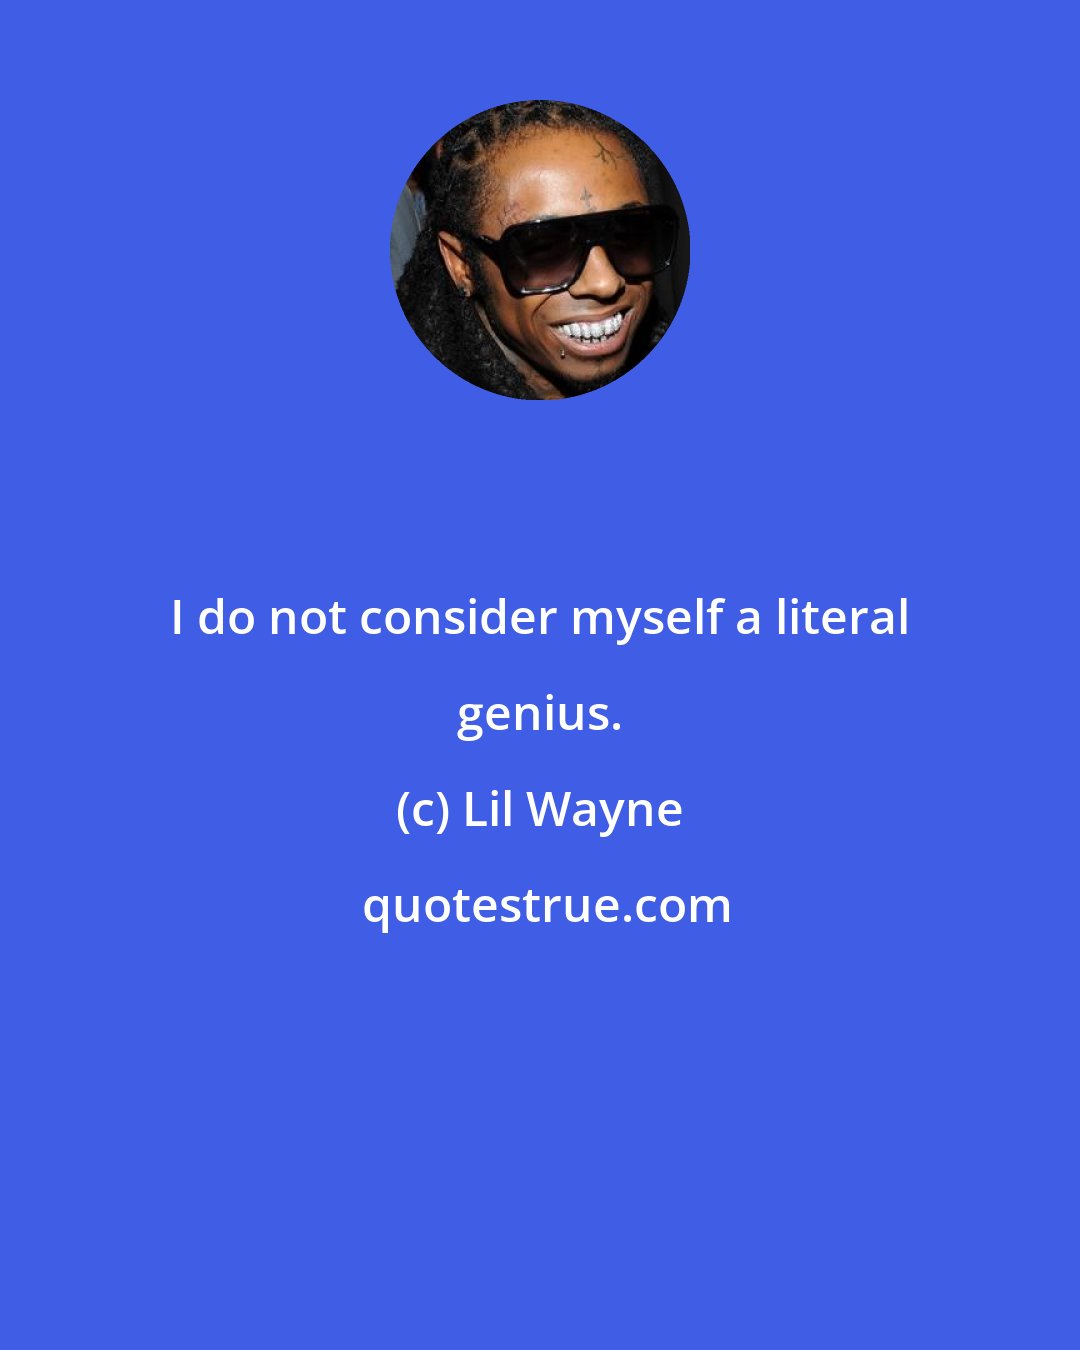 Lil Wayne: I do not consider myself a literal genius.